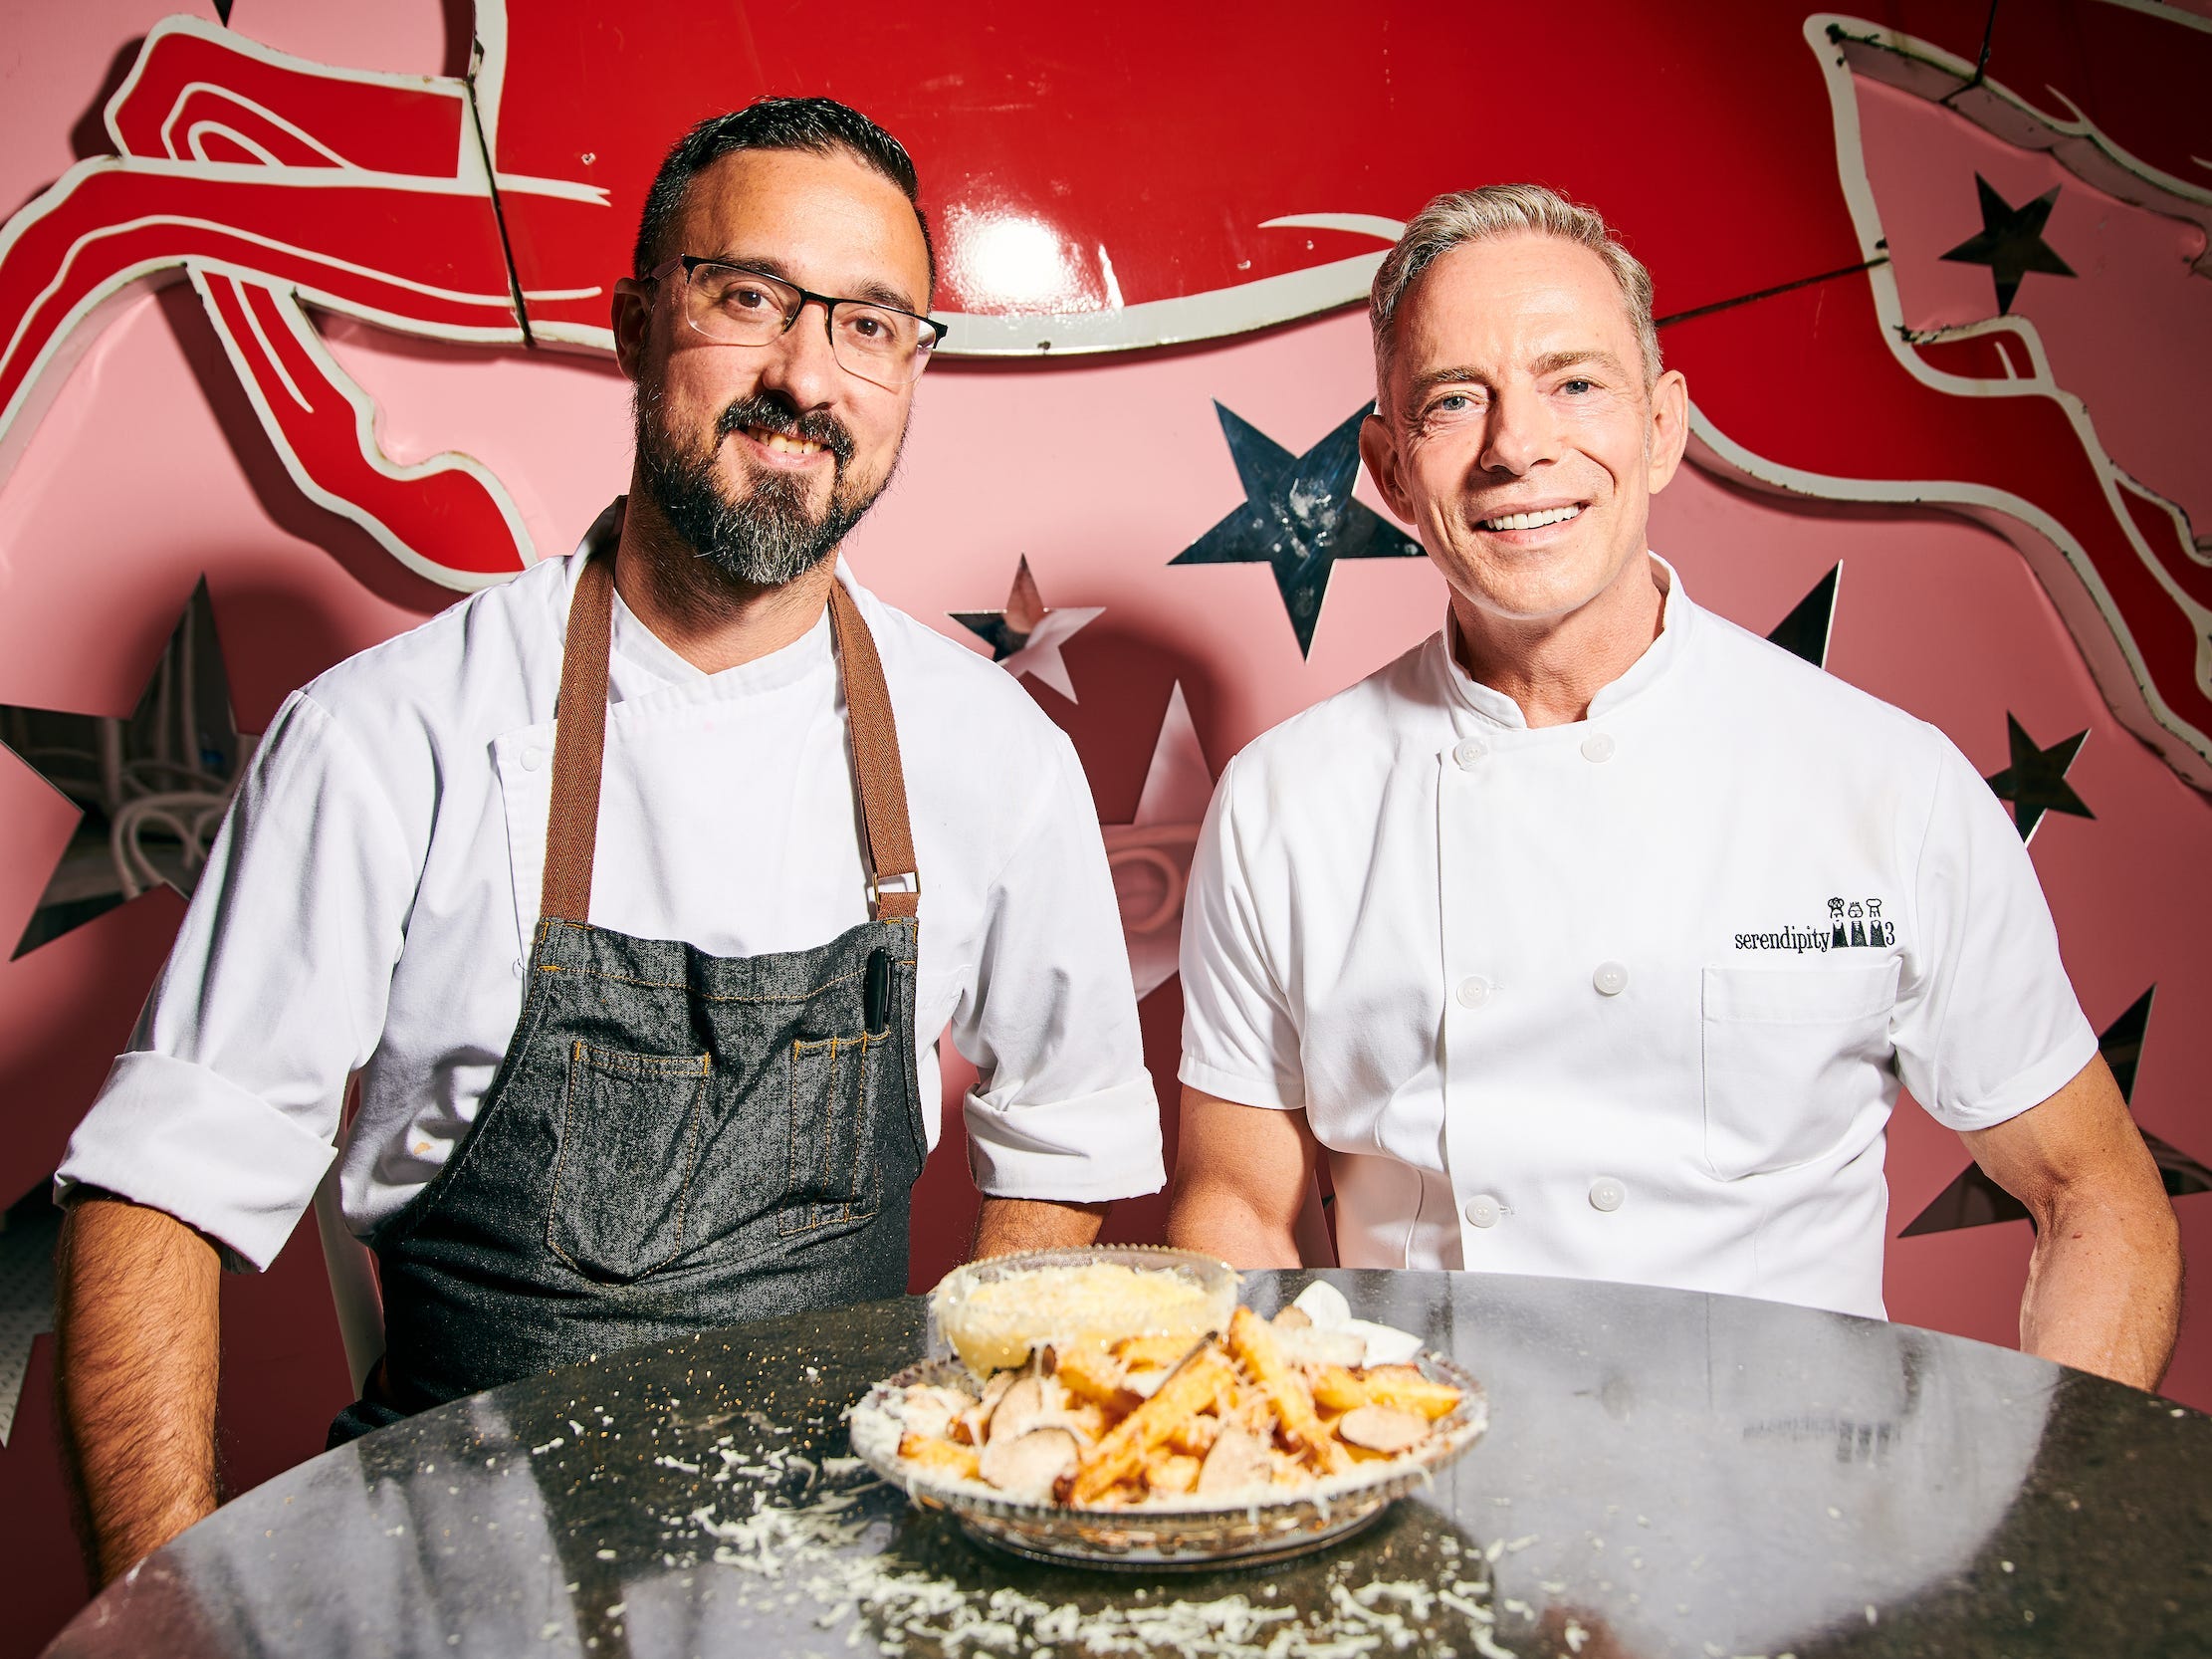 Serendipity3 Chef Frederick Schoen-Kiewert (left) with creative director Joe Calderone (right)